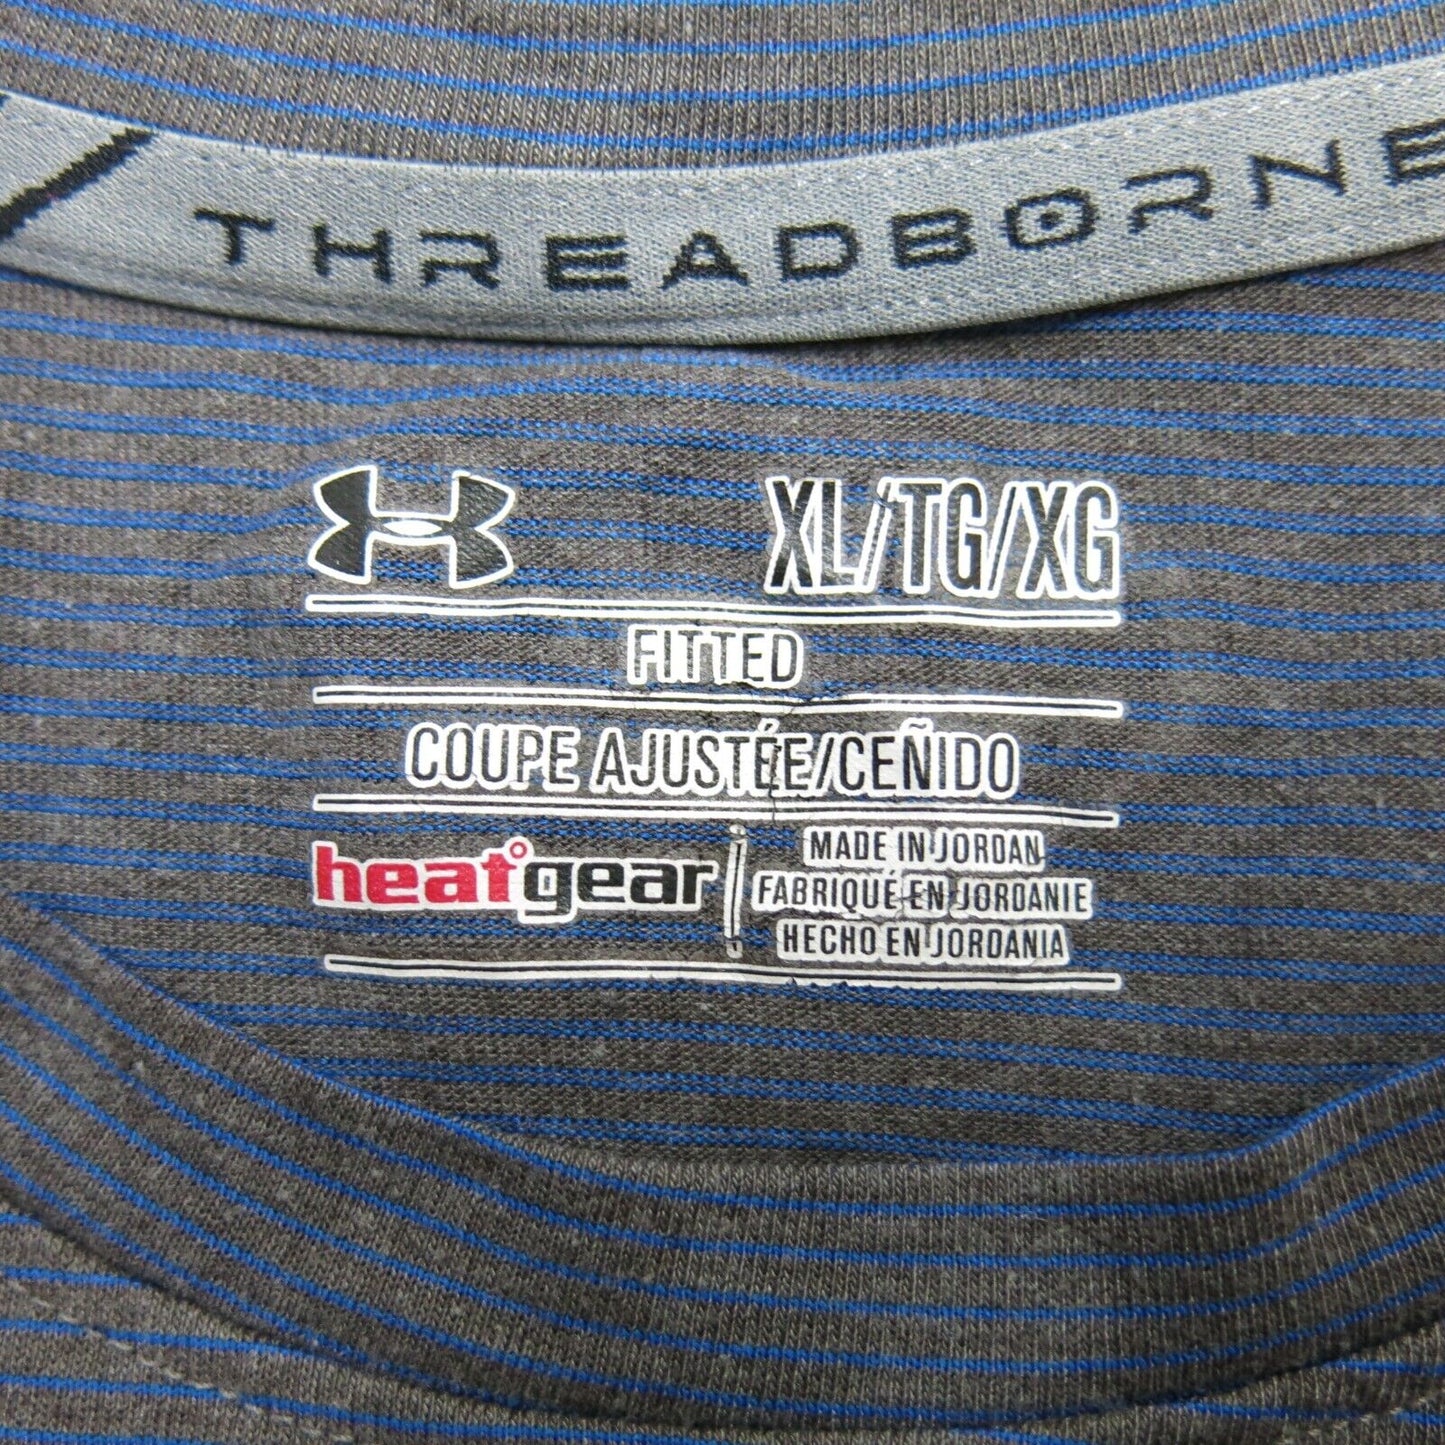 Under Armour Mens Crew Neck T Shirt Fitted Heatgear Short Sleeves Blue Size XL